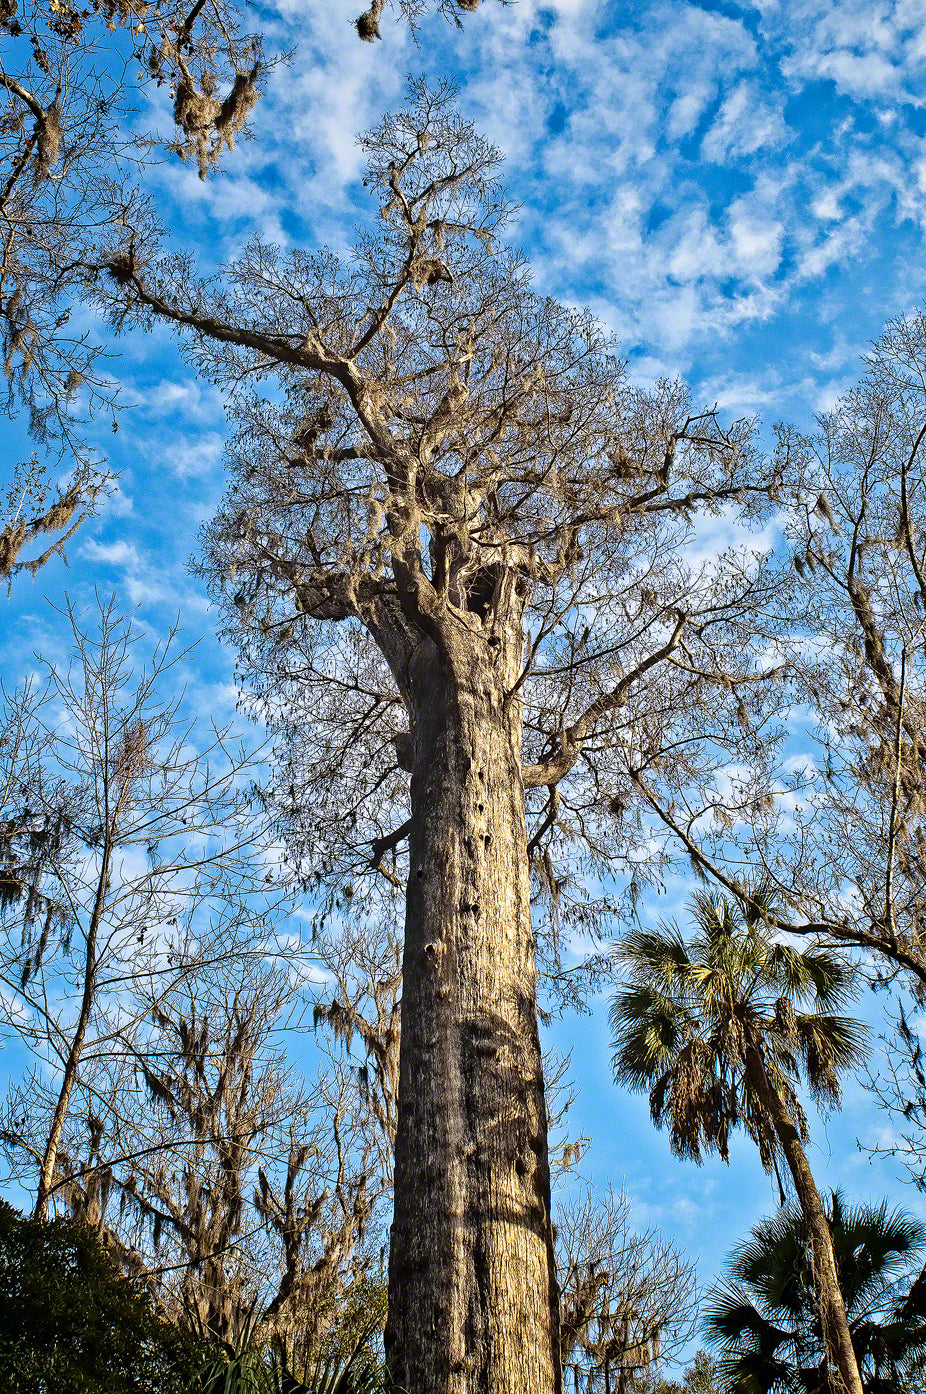 artemis cypress tree